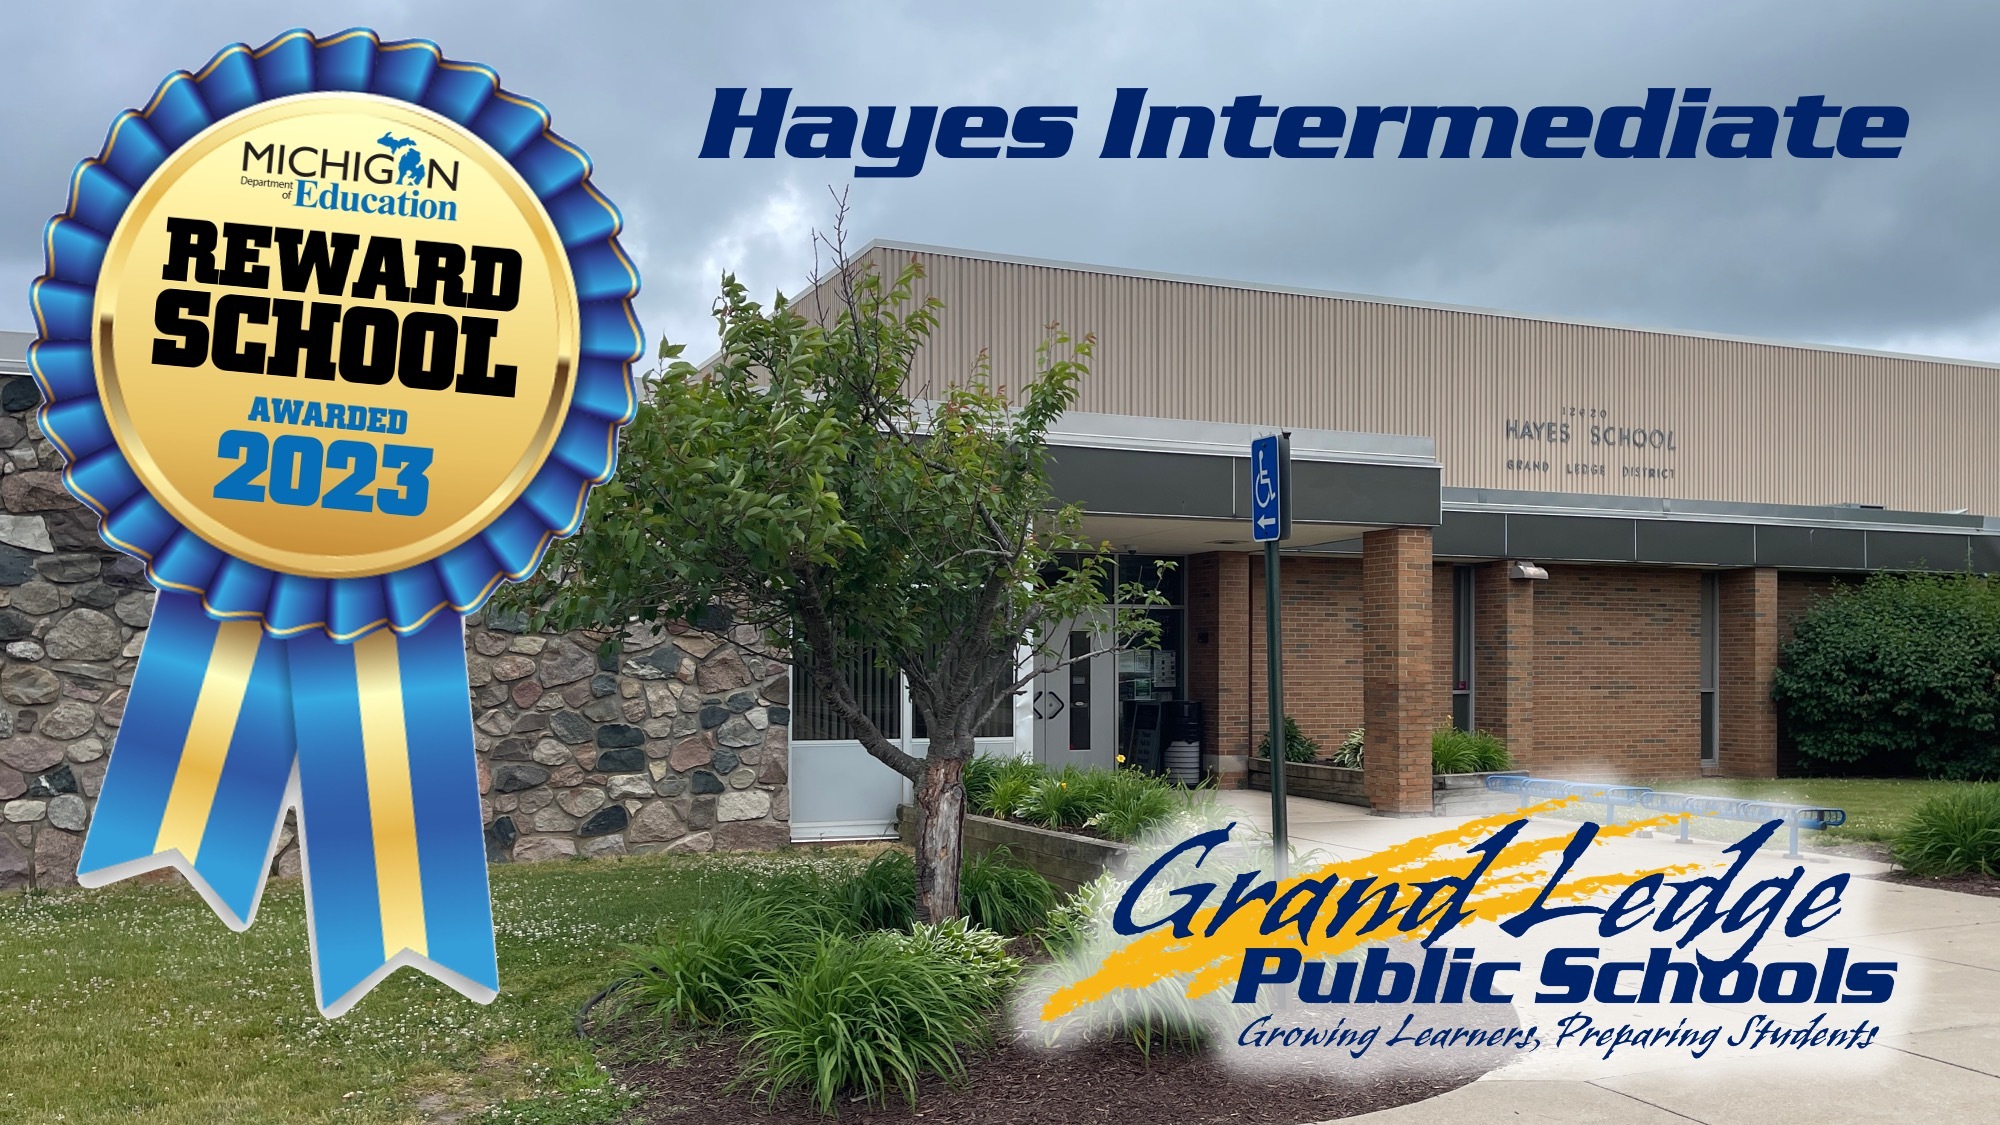 Hayes Intermediate is a Reward School